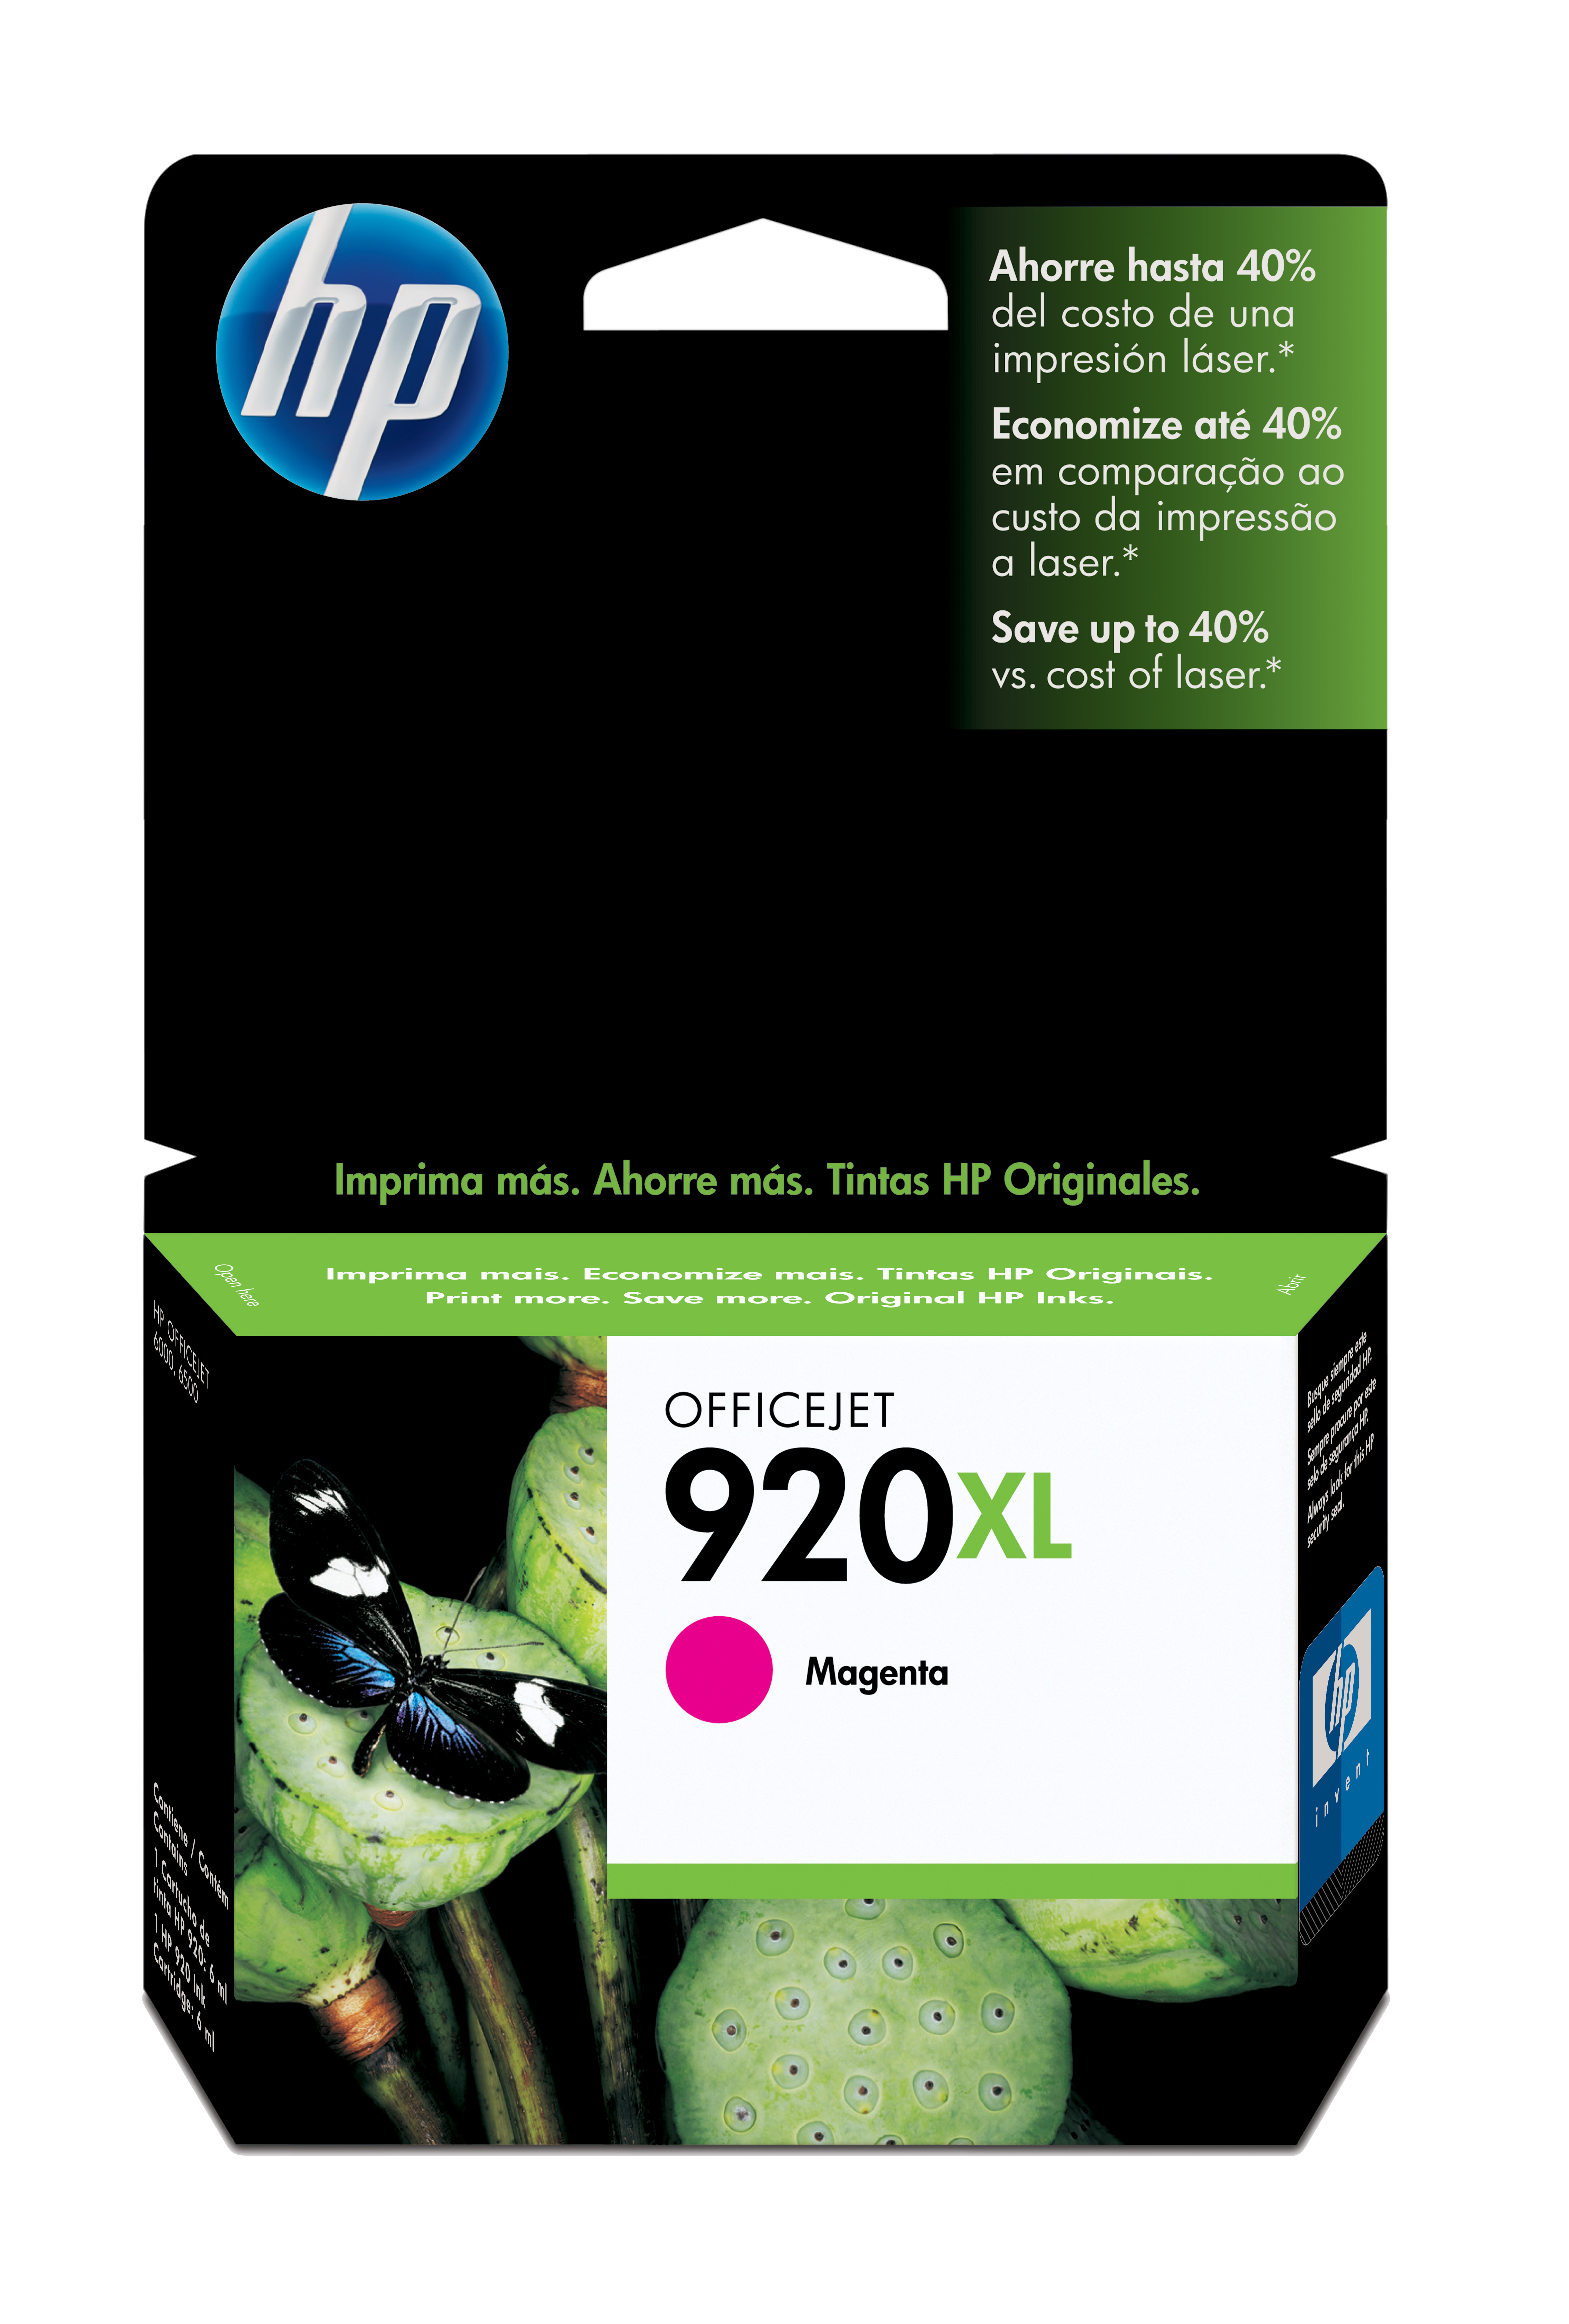 HP 920XL Magenta Officejet Ink Cartridge Genuine HP Inkjet